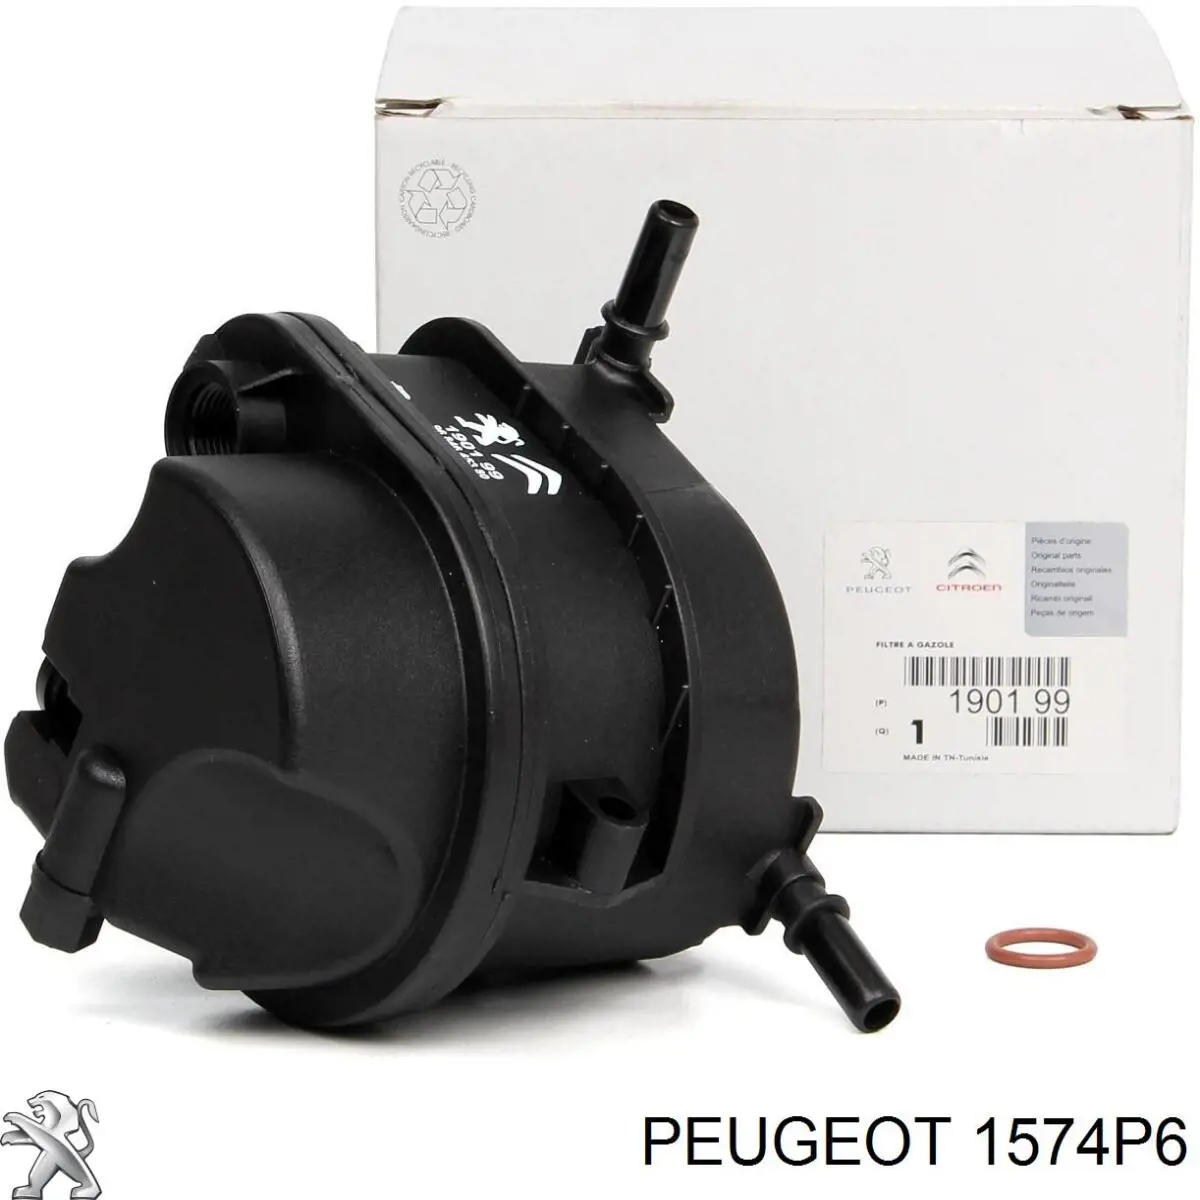 1574P6 Peugeot/Citroen tubo de combustible atras de las boquillas